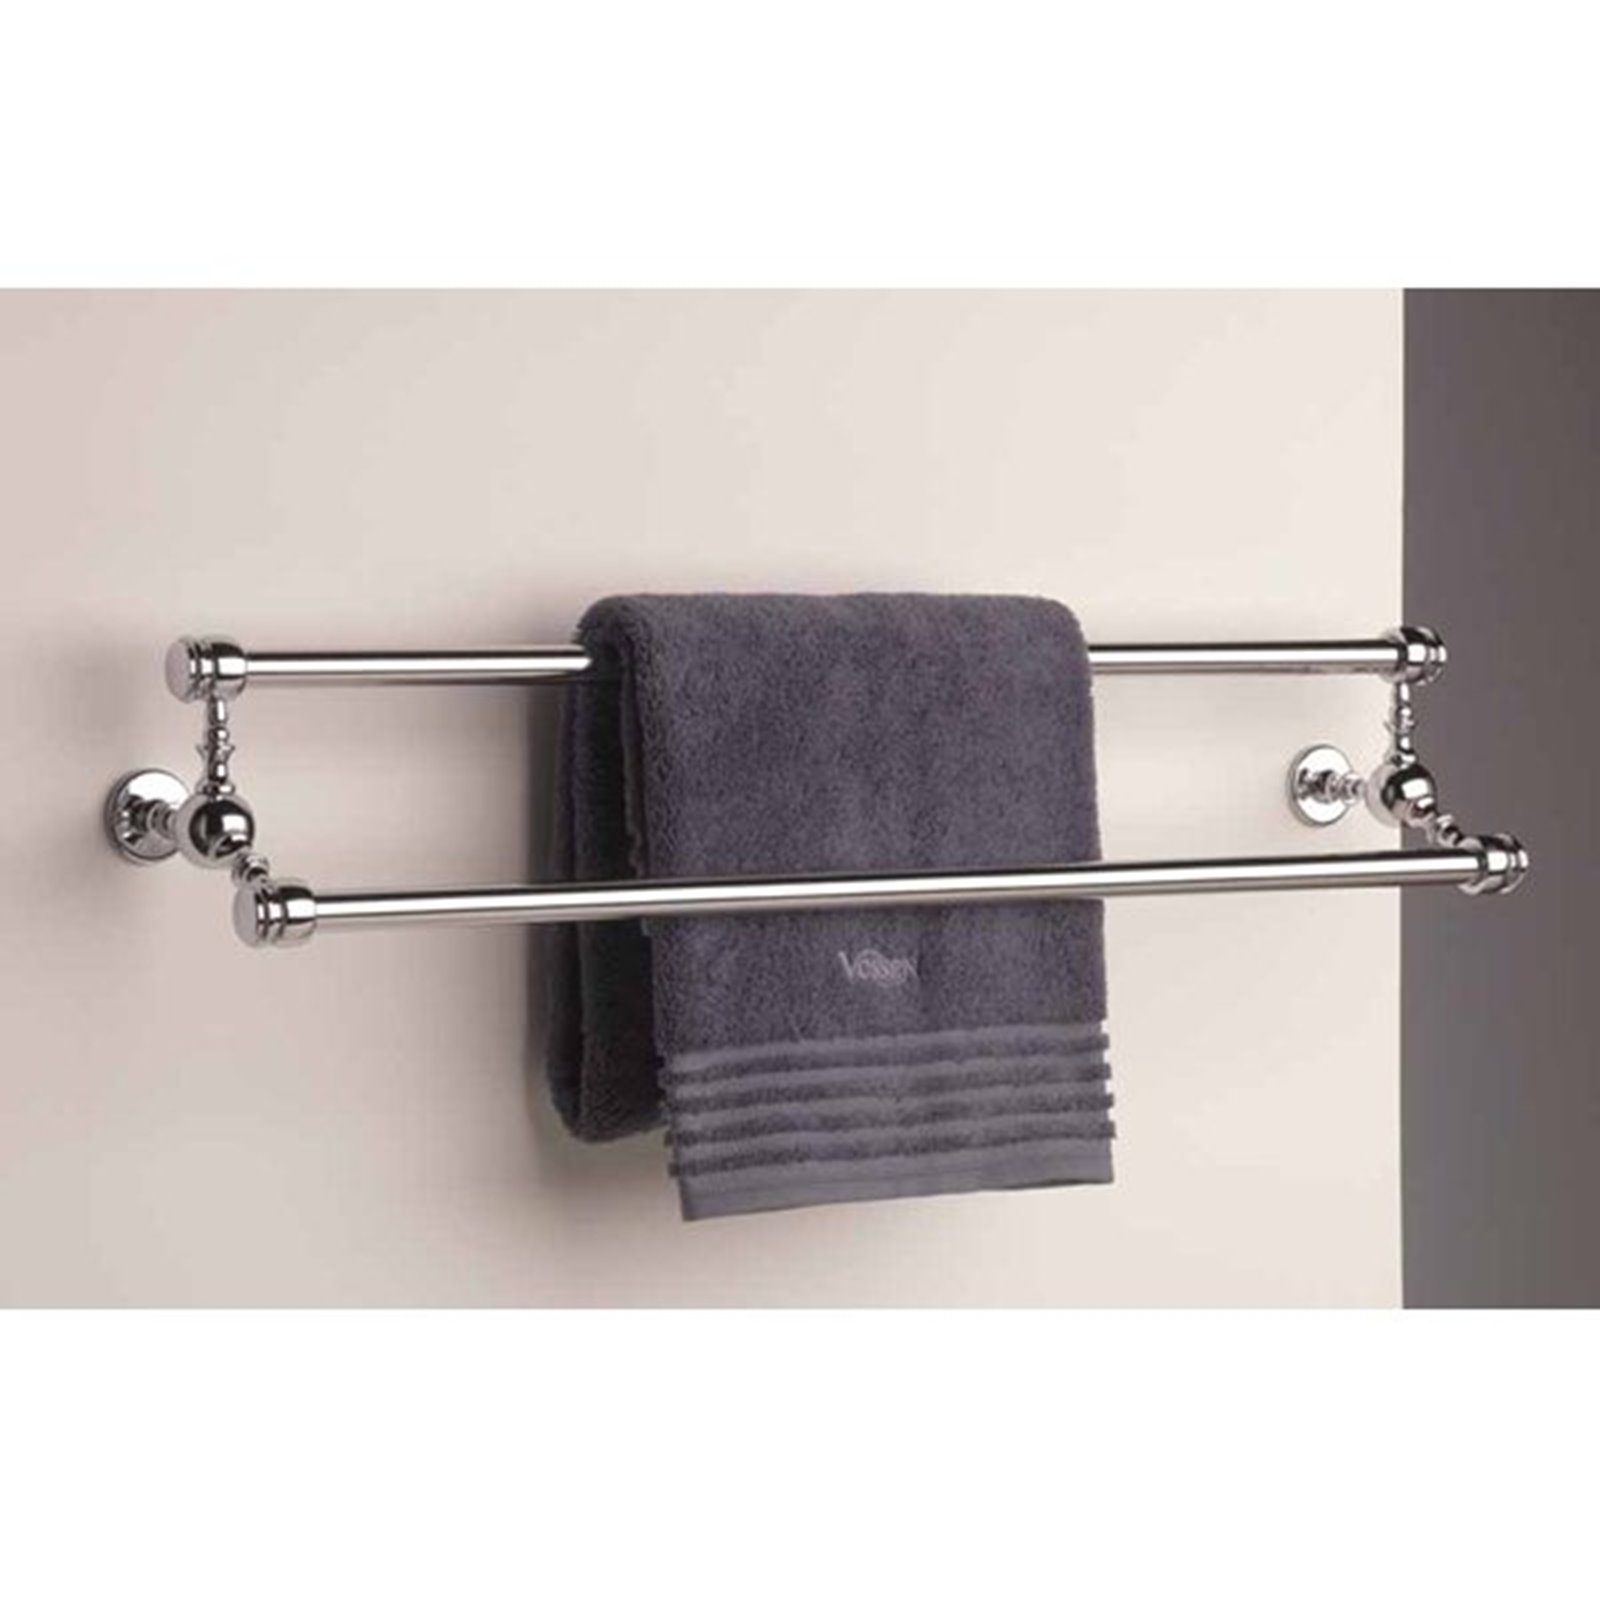 Bathroom Handmade Double Towel Rail Image